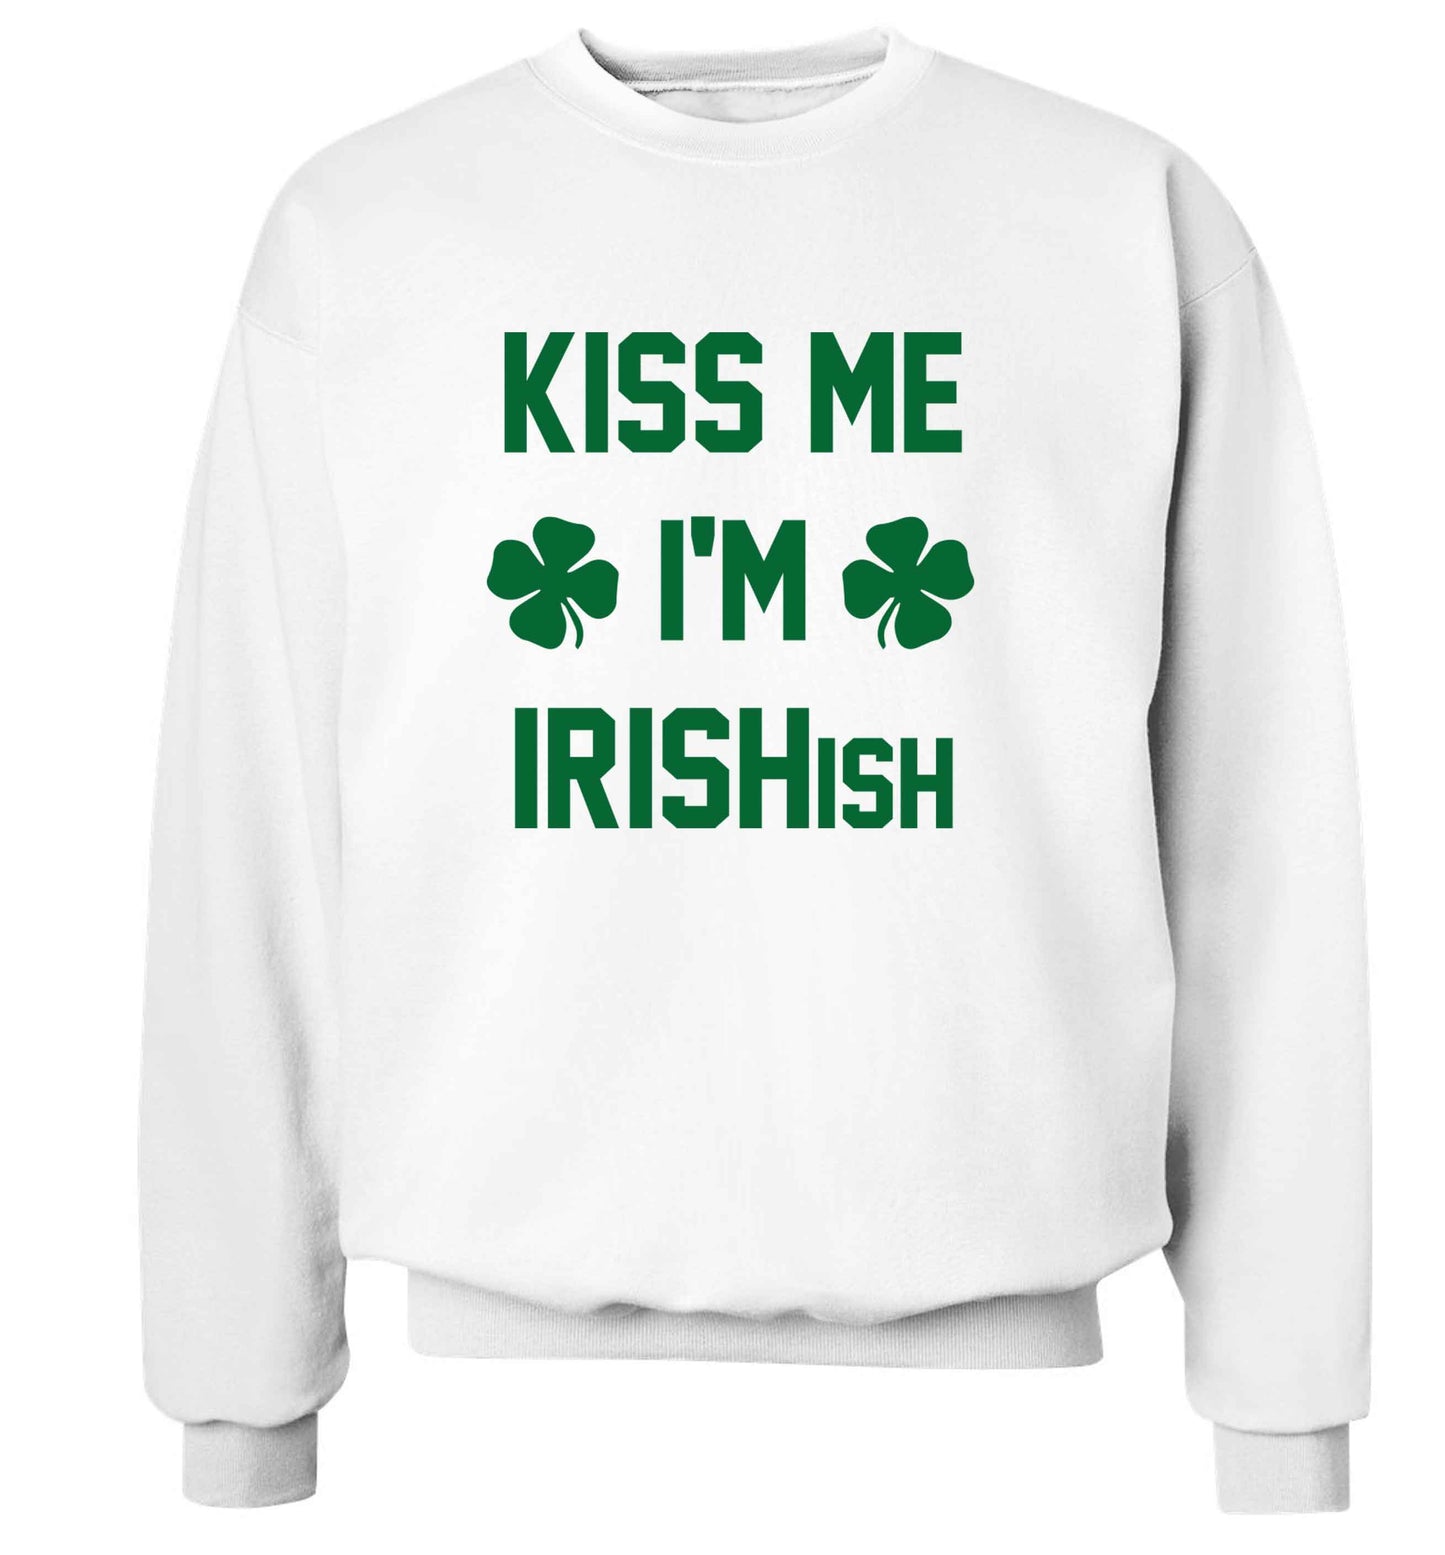 Kiss me I'm Irishish adult's unisex white sweater 2XL